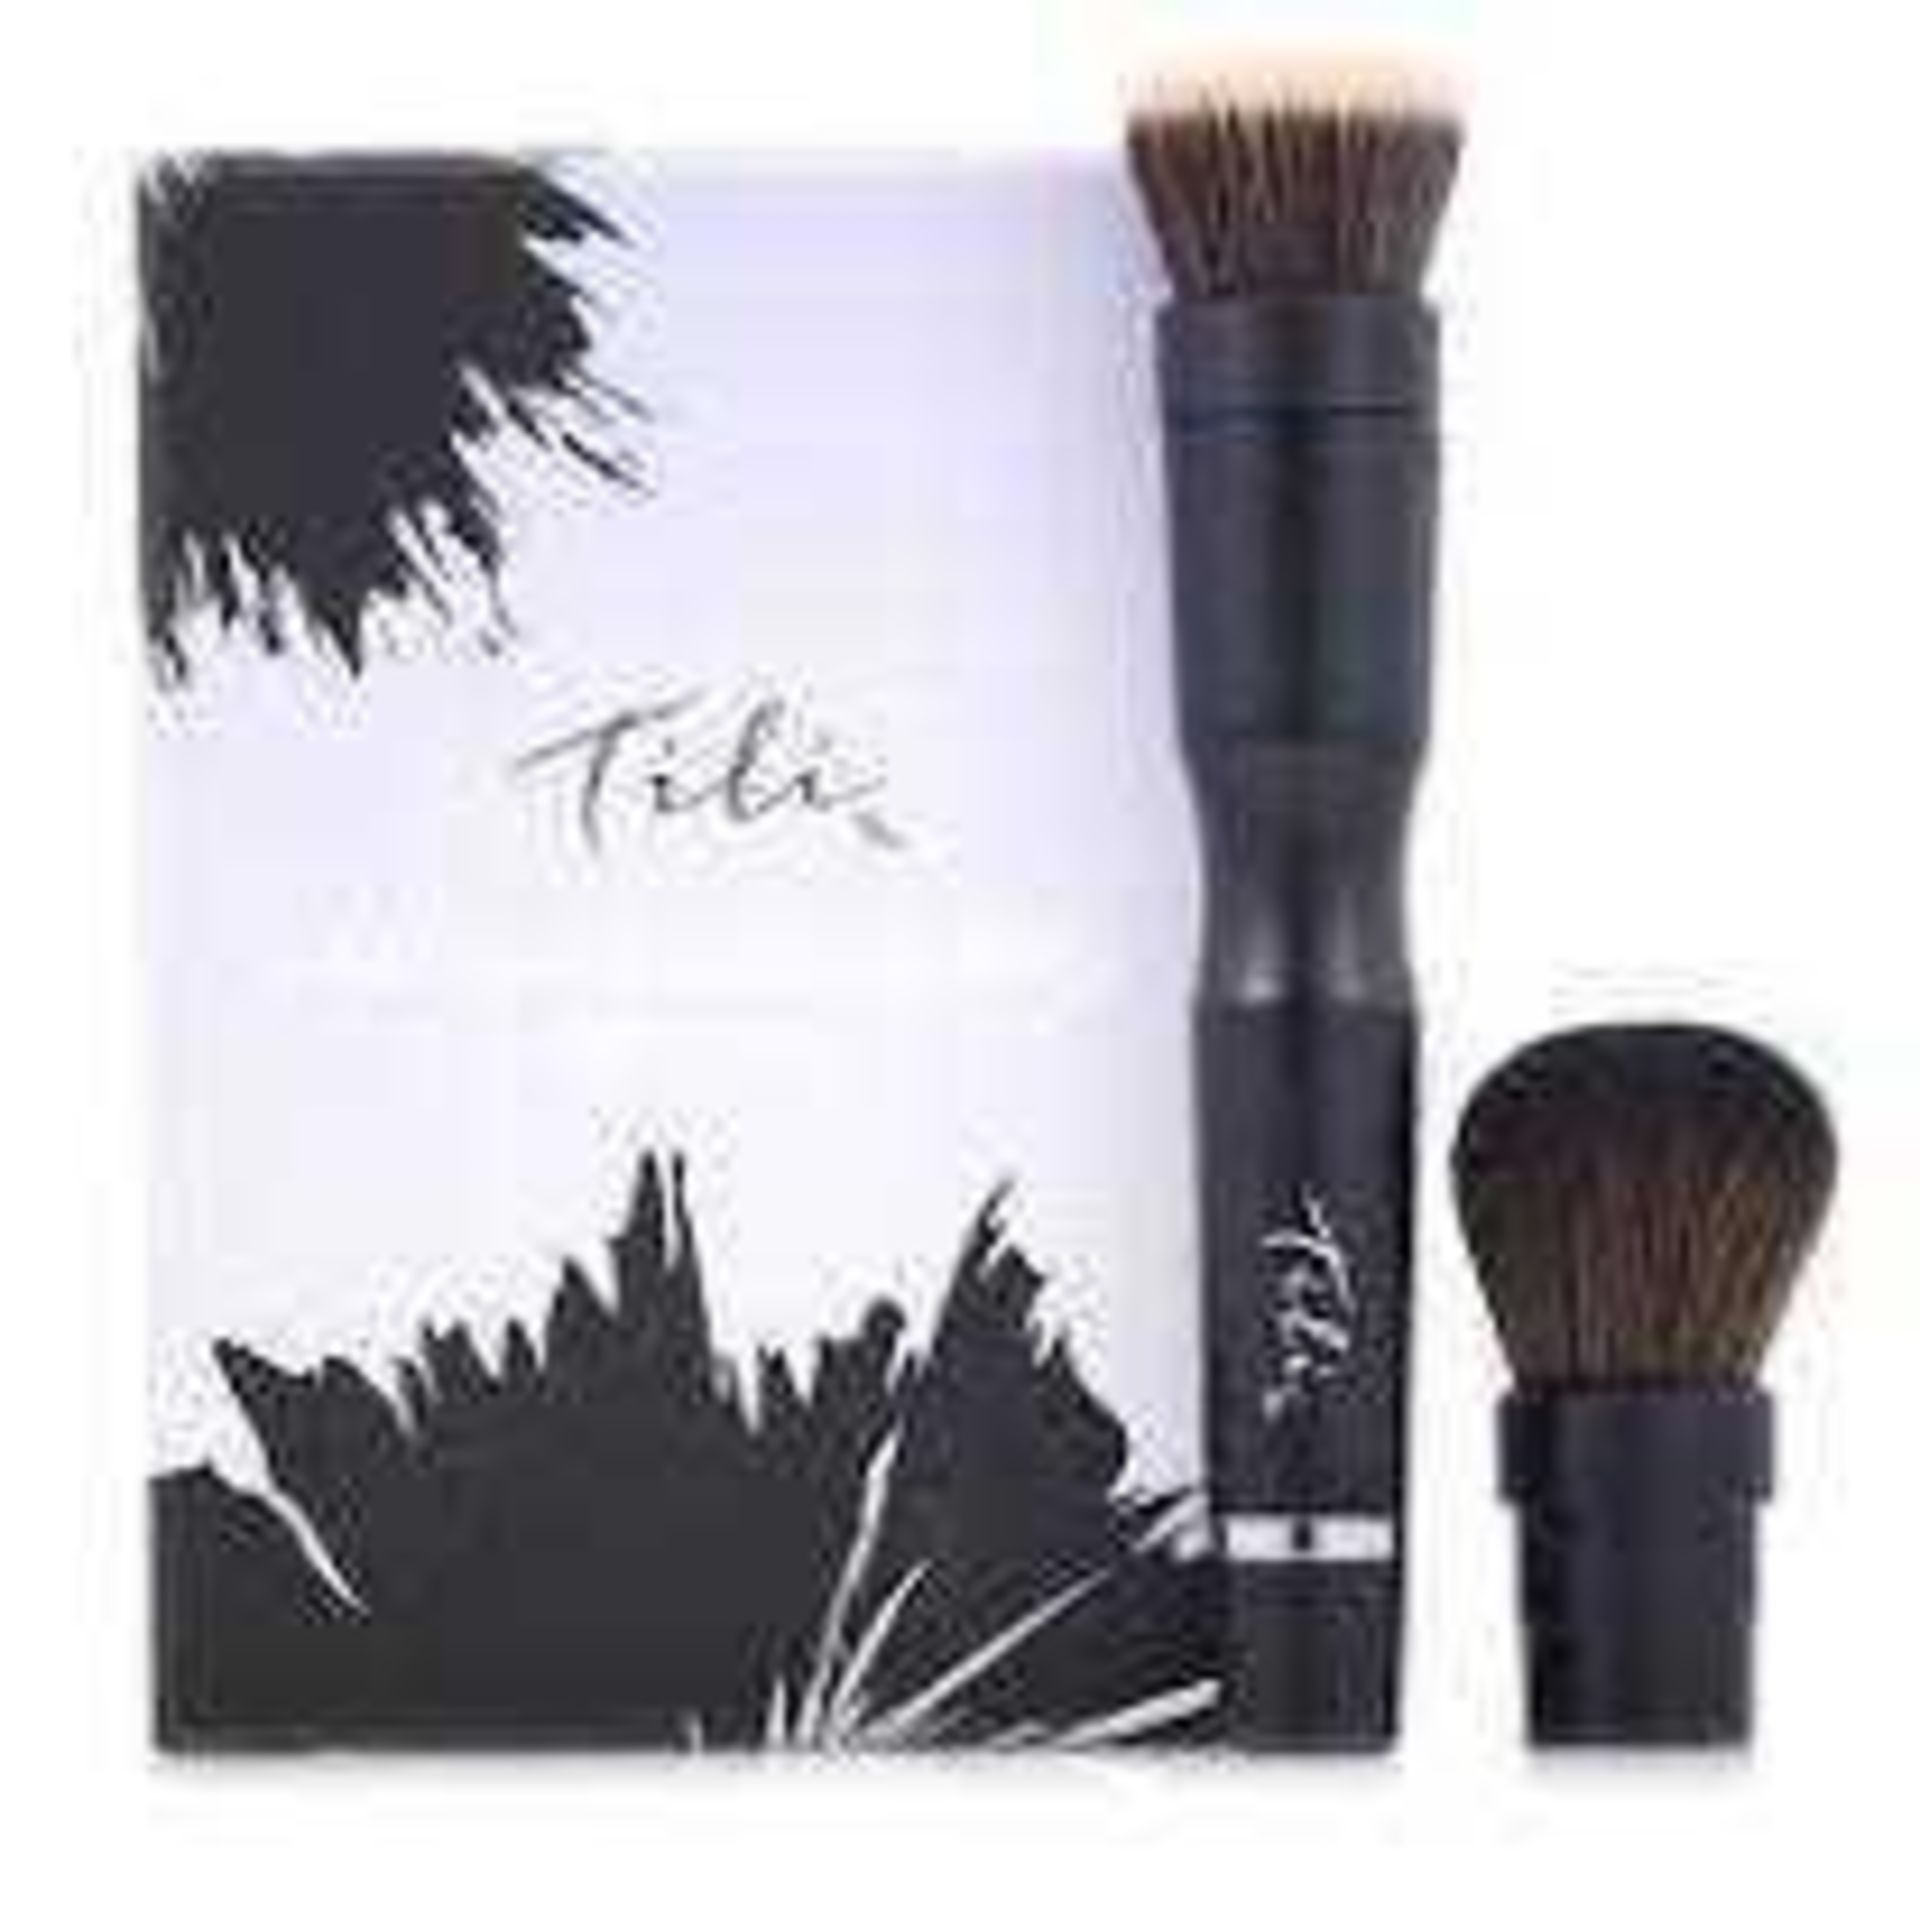 RRP £100 Lot To Contain X2 Items, Tili Pro Face Cleaner, Tili Pro Make Up Blending Brush